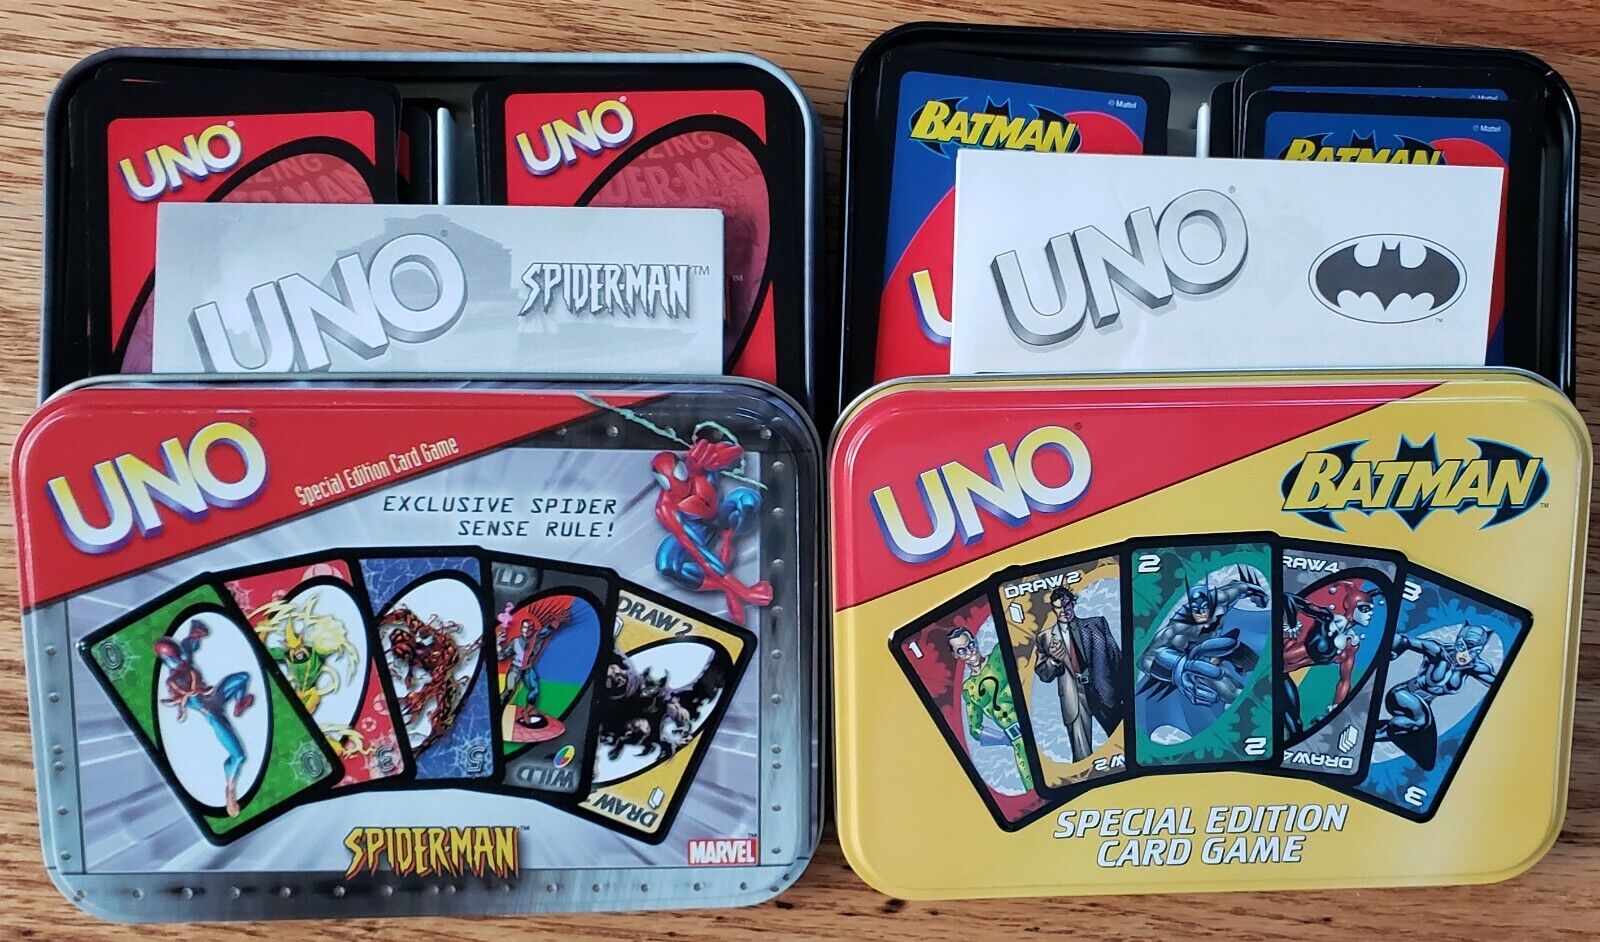 LOT of 2 UNO Games -- BATMAN / SPIDERMAN  VG Condition  Quick & Free Shipping! Mattel